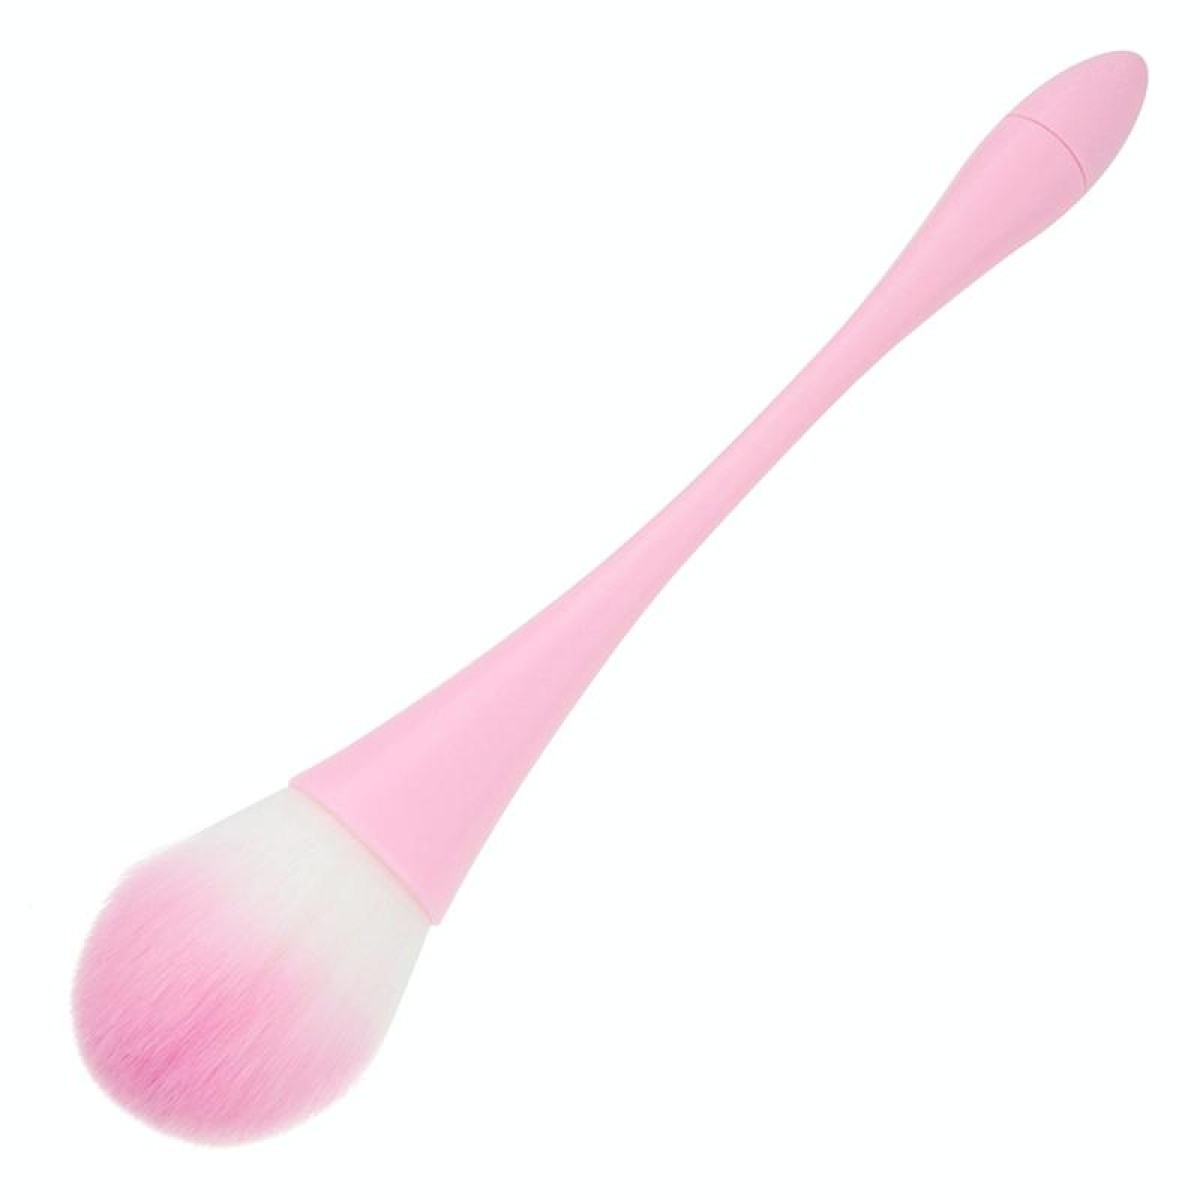 Single Small Waist Makeup Brush Nail Powder Dust Blush Loose Powder Brush, Specification: Pink Rod Pink Hair